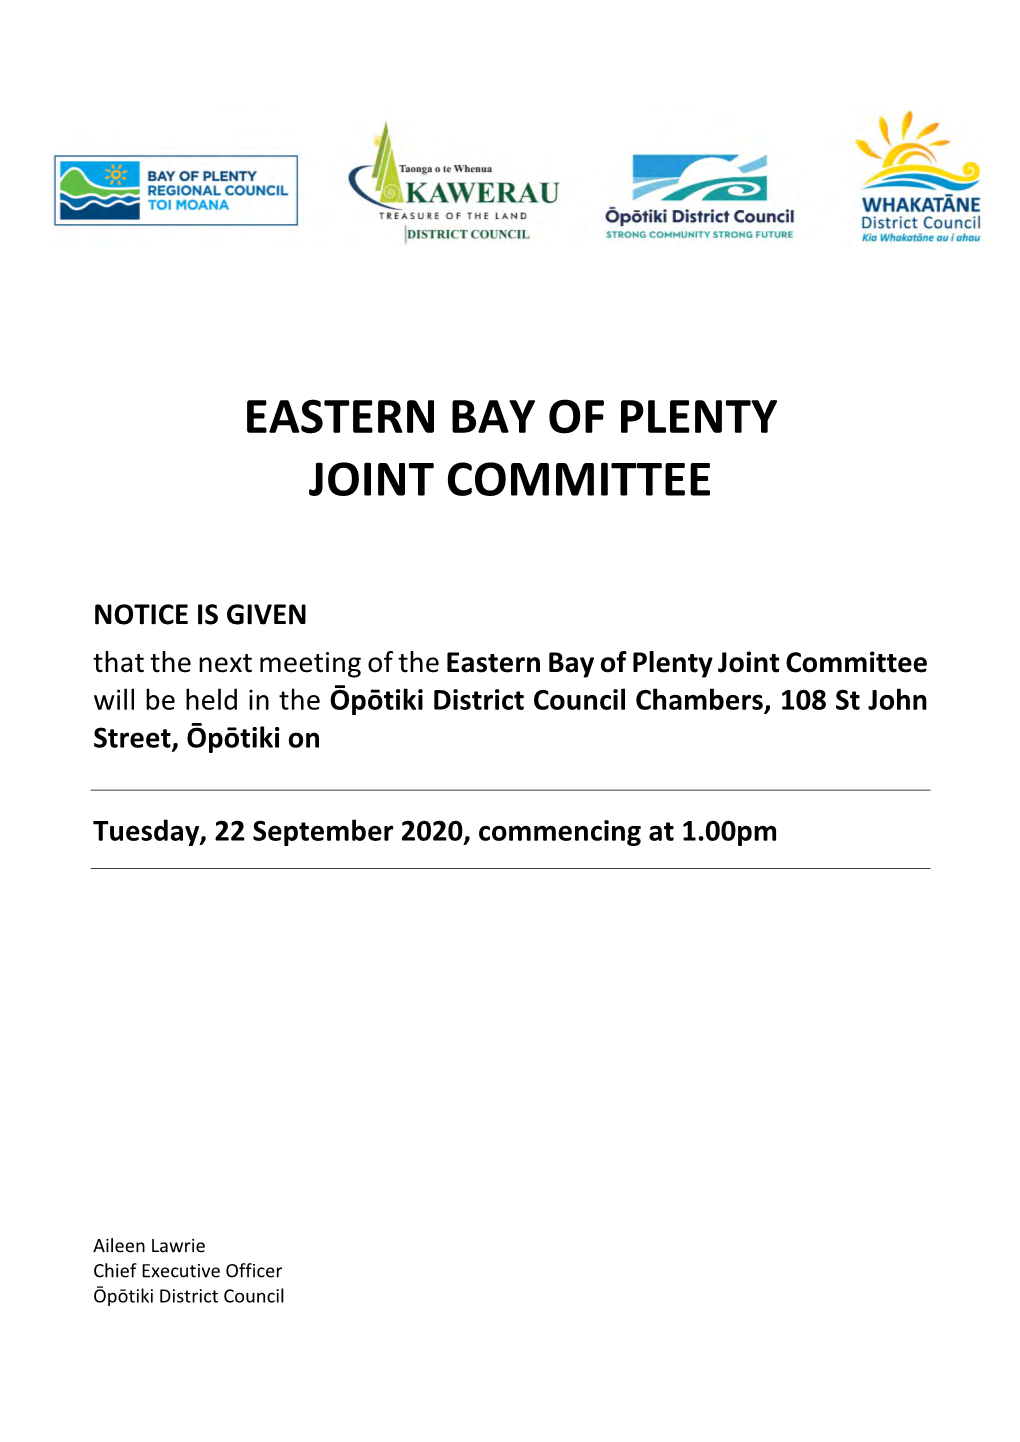 Eastern Bay of Plenty Joint Committee Meeting Agenda